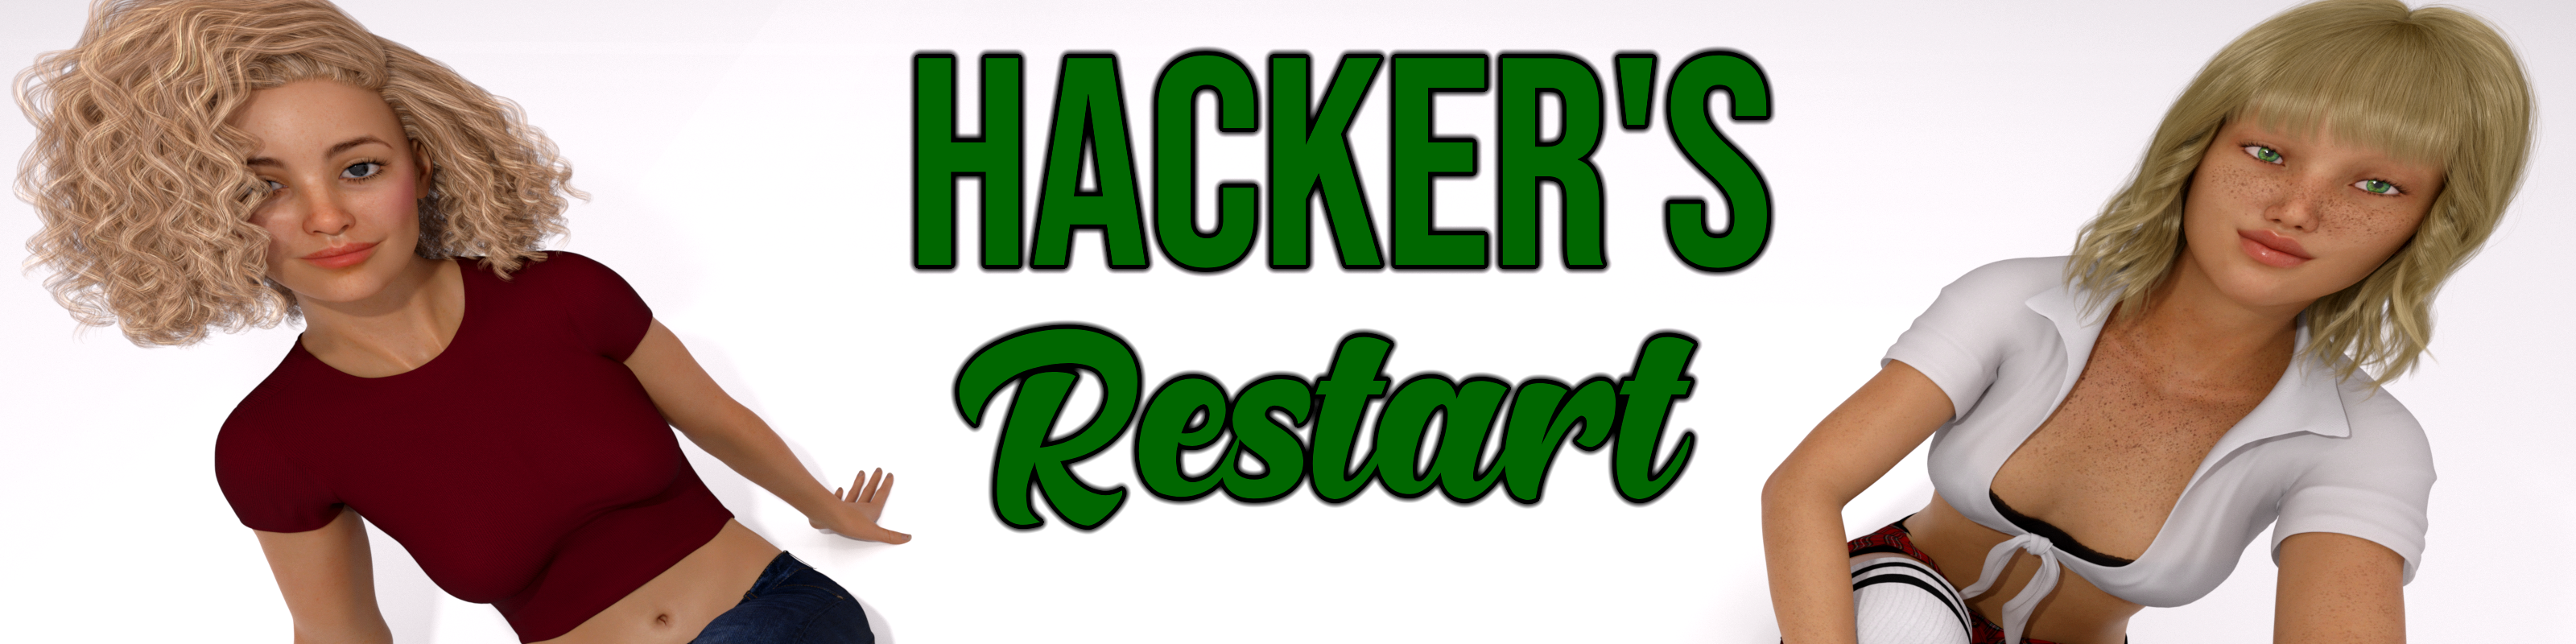 Hacker's Restart1.png